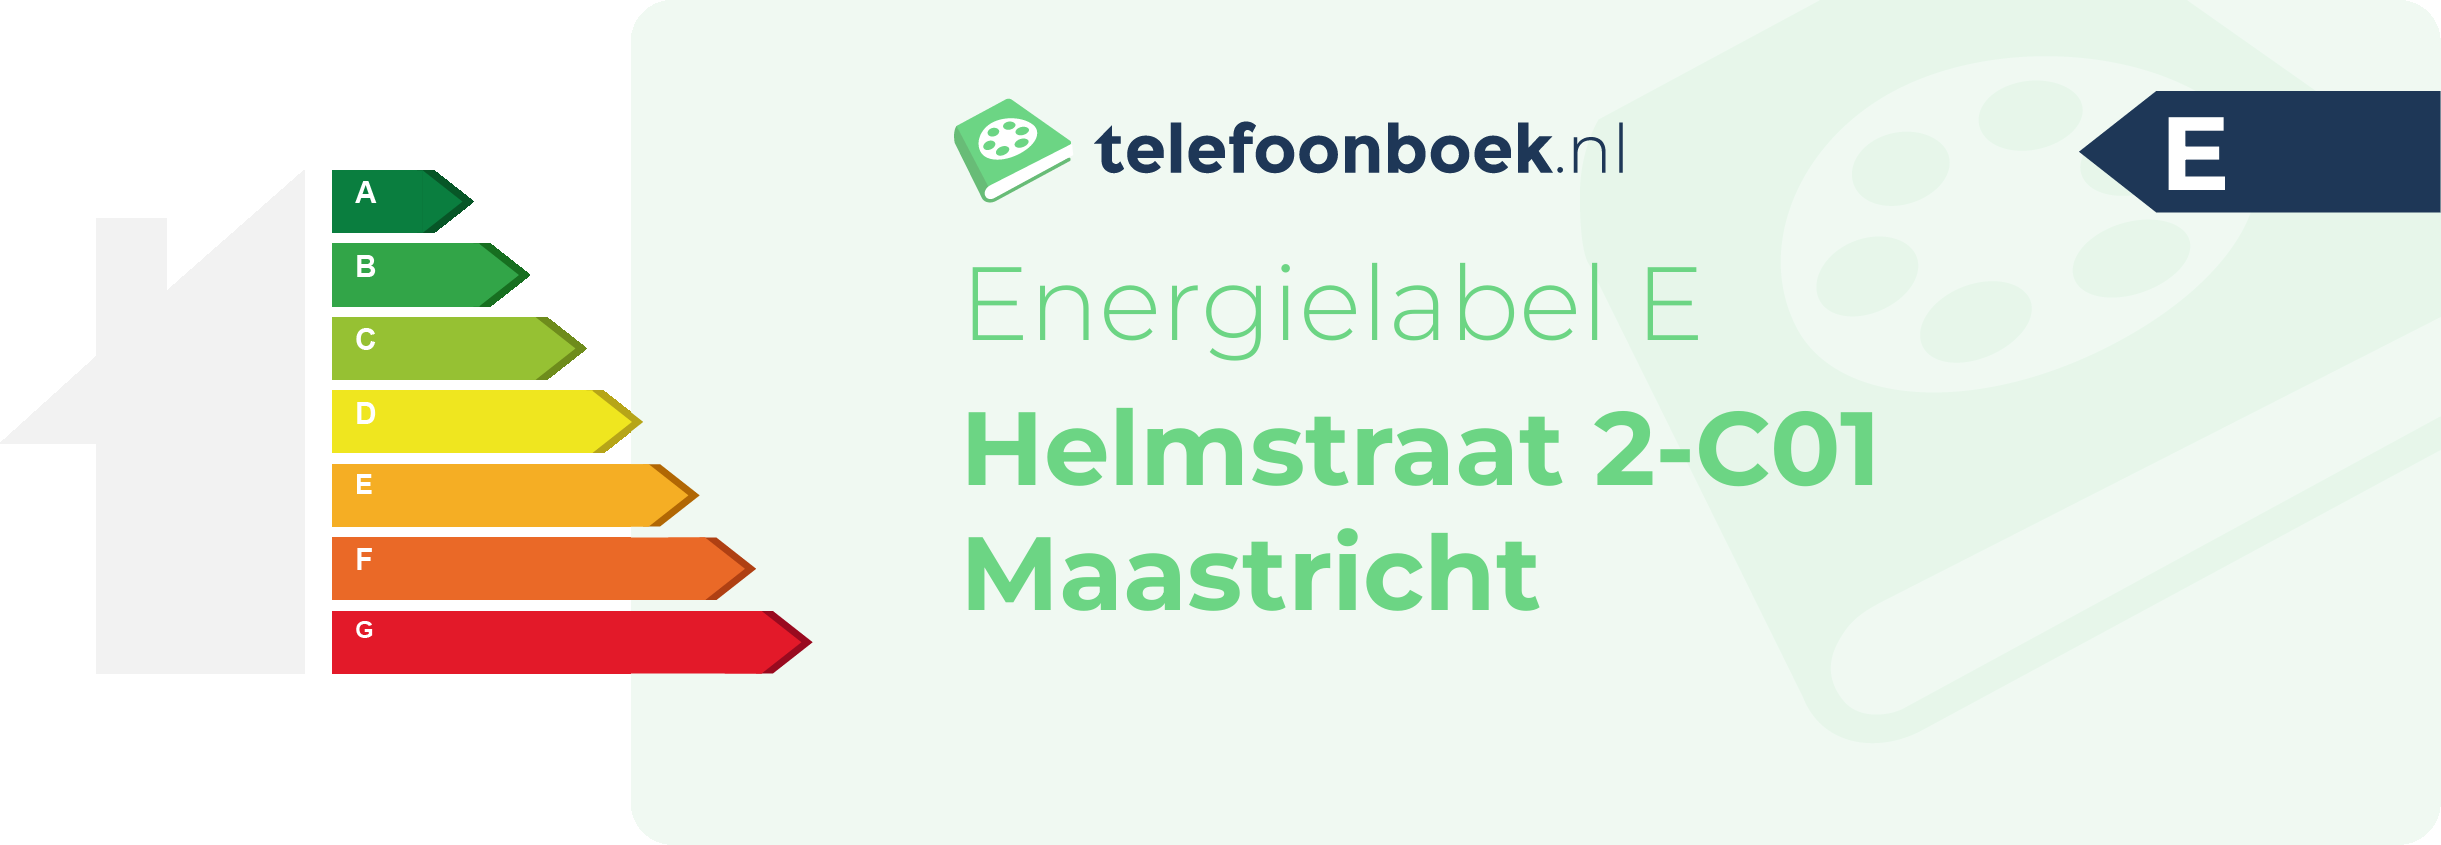 Energielabel Helmstraat 2-C01 Maastricht